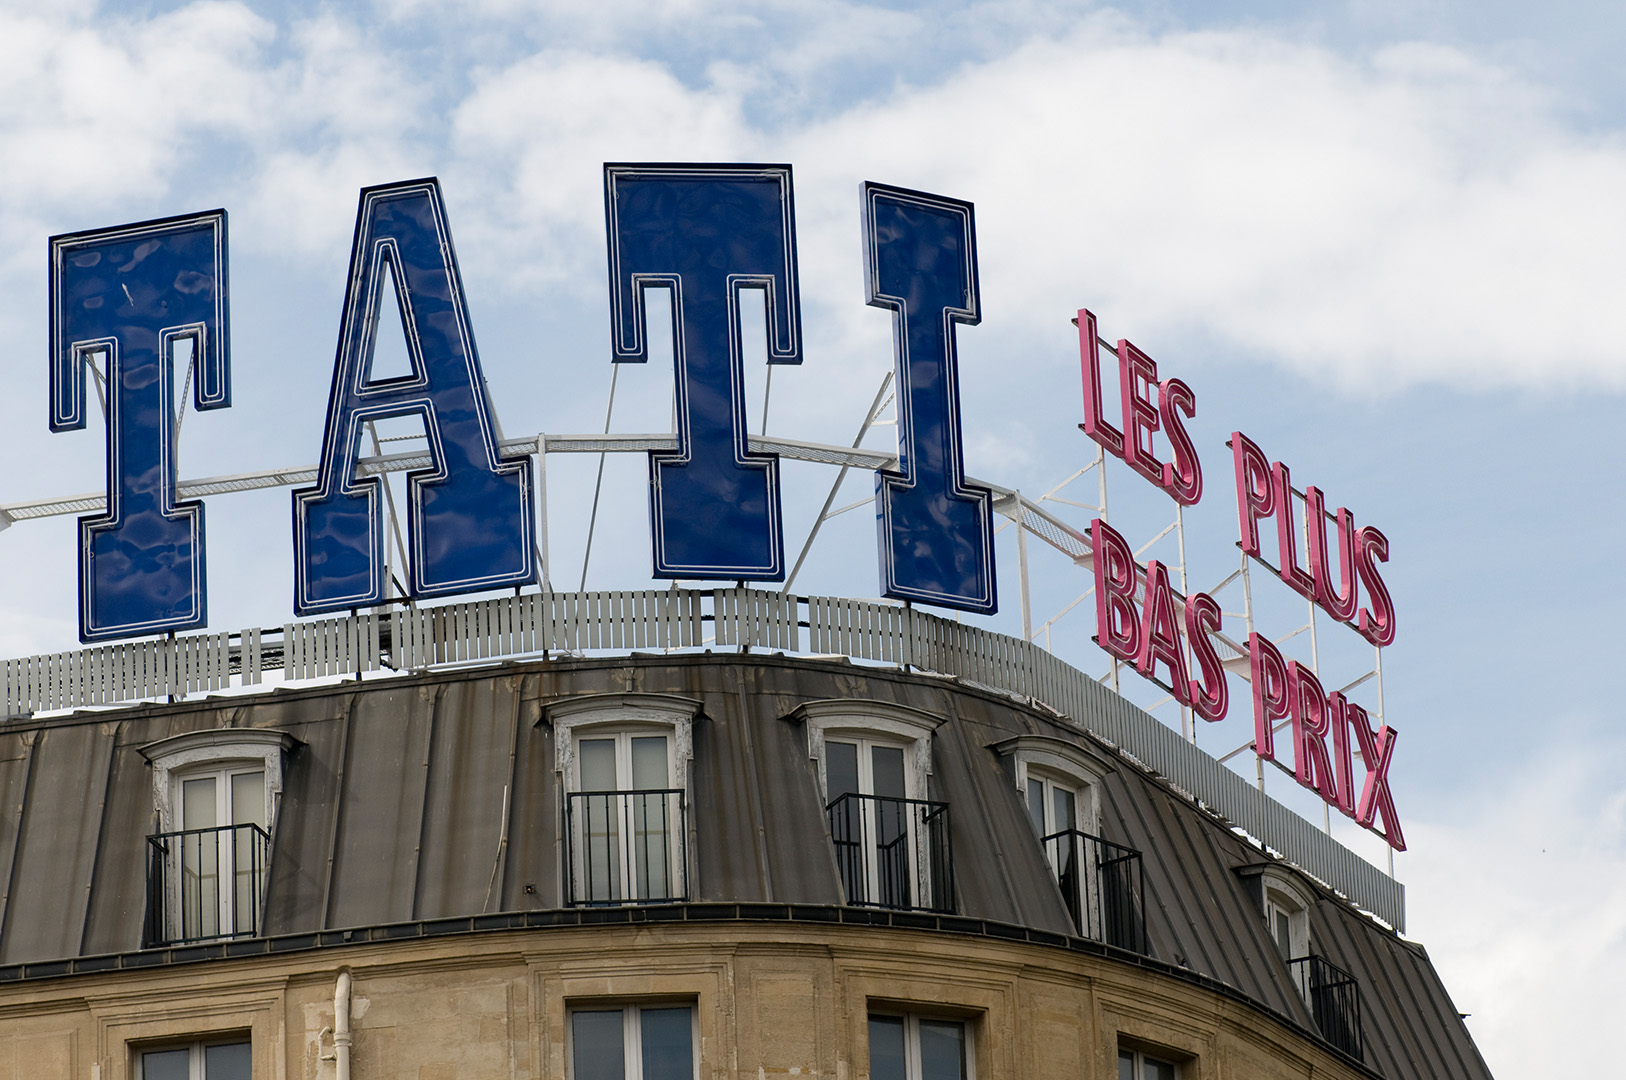 Werbefotografie Studio Oberfranken Street Aufnahme mit Reklameschrift "Tati - Les Plus Bas Pris" in Paris, Frankreich. Feigfotodesign